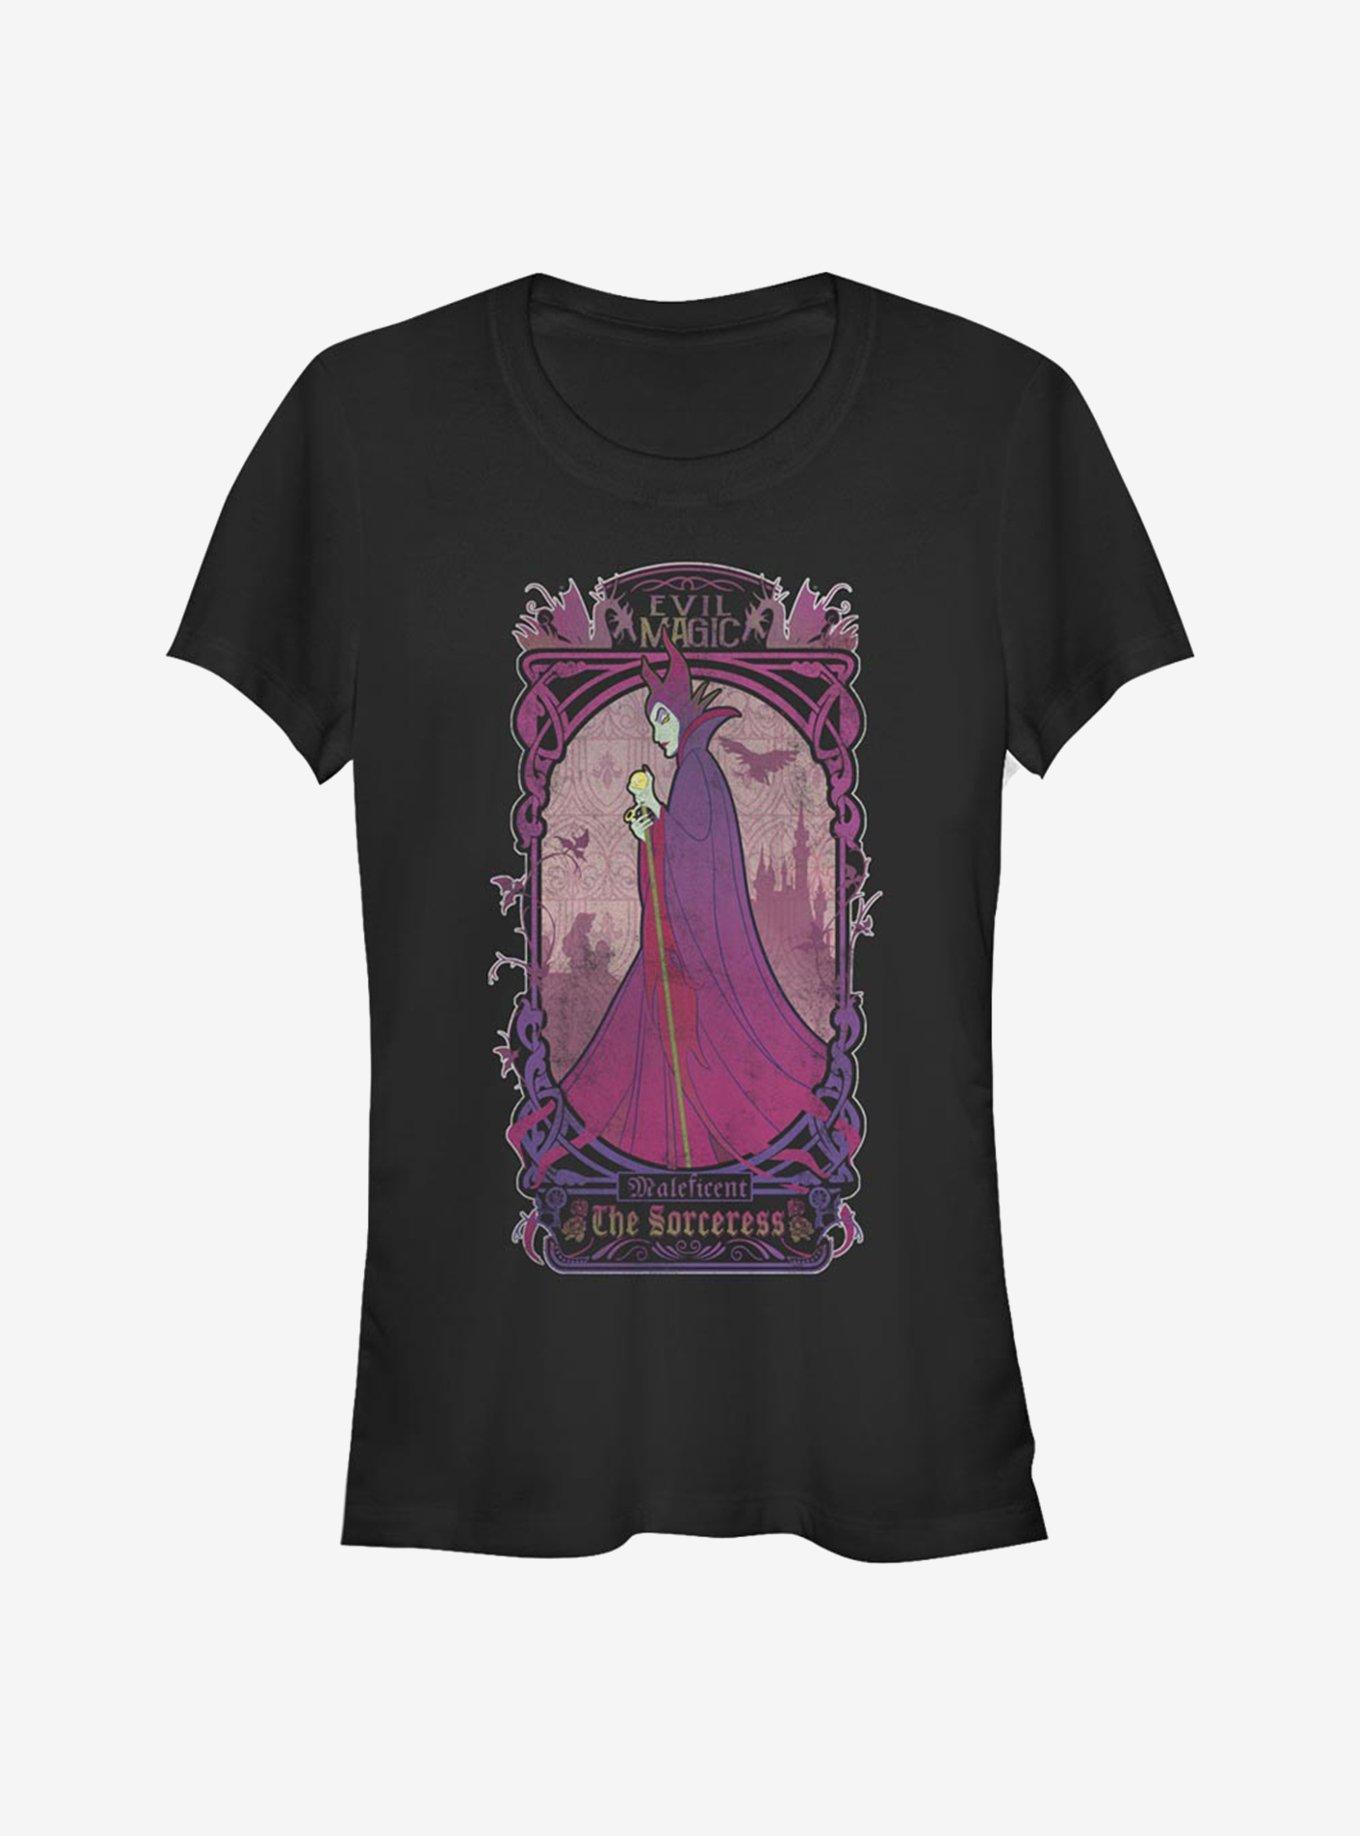 Disney Sleeping Beauty The Sorceress Maleficent Girls T-Shirt, BLACK, hi-res